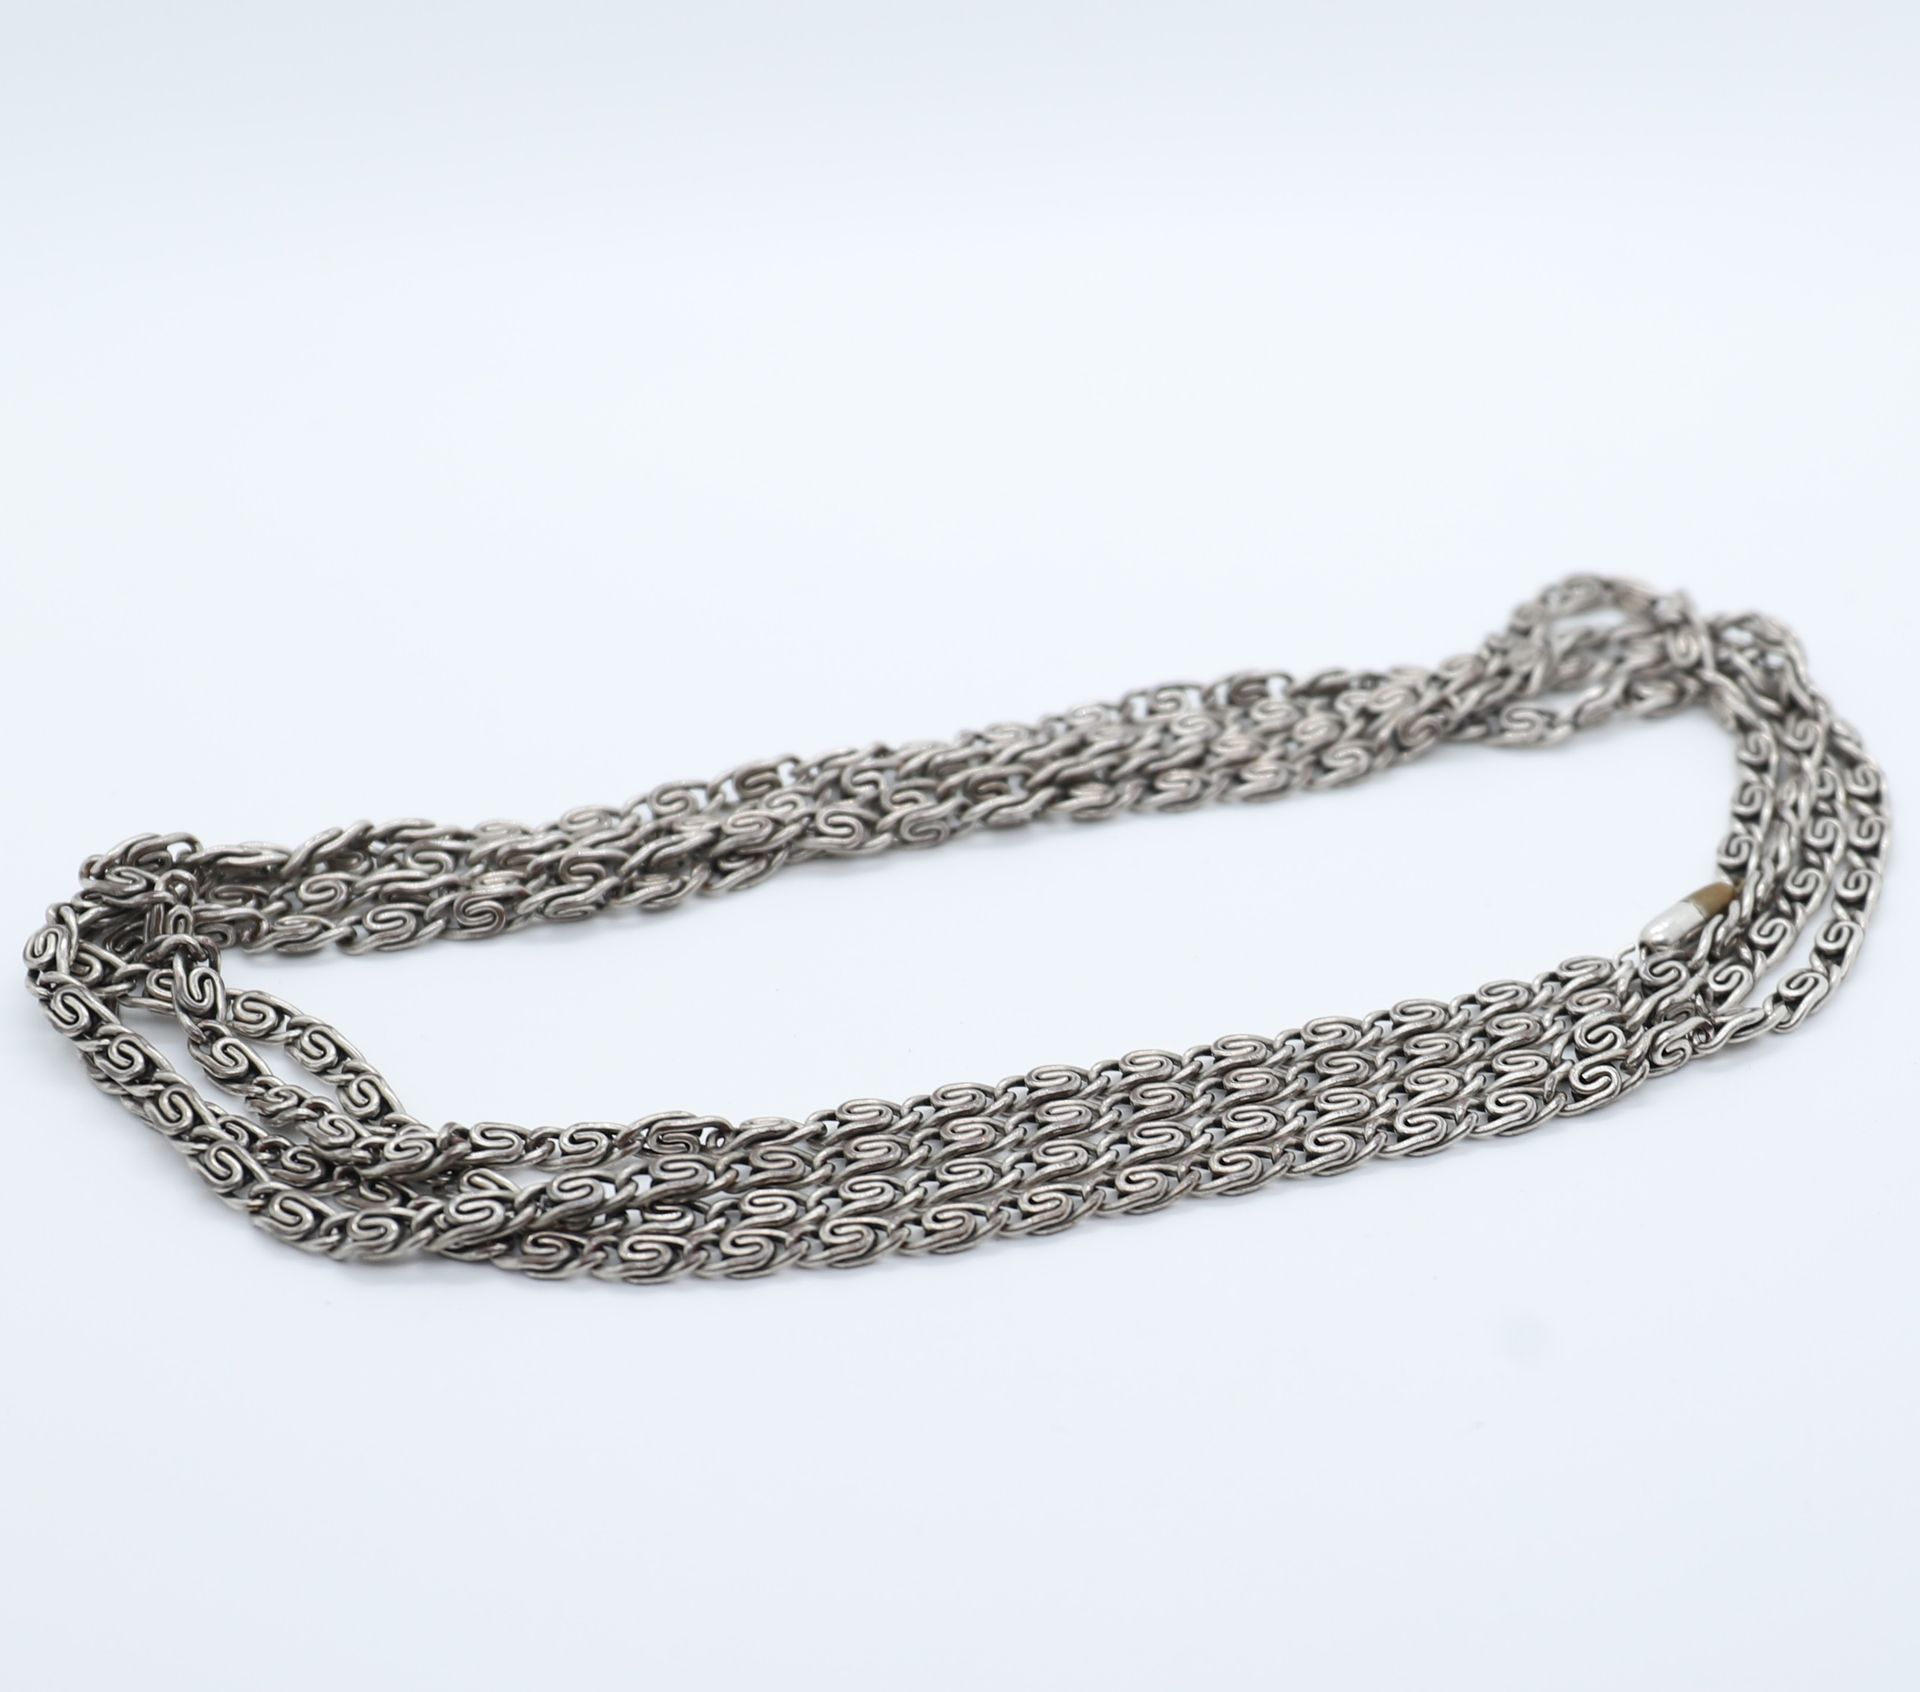 Null 非常长的镀银链，带有 "回形针 "缝线
螺丝扣
长：150厘米
重量：58.3克